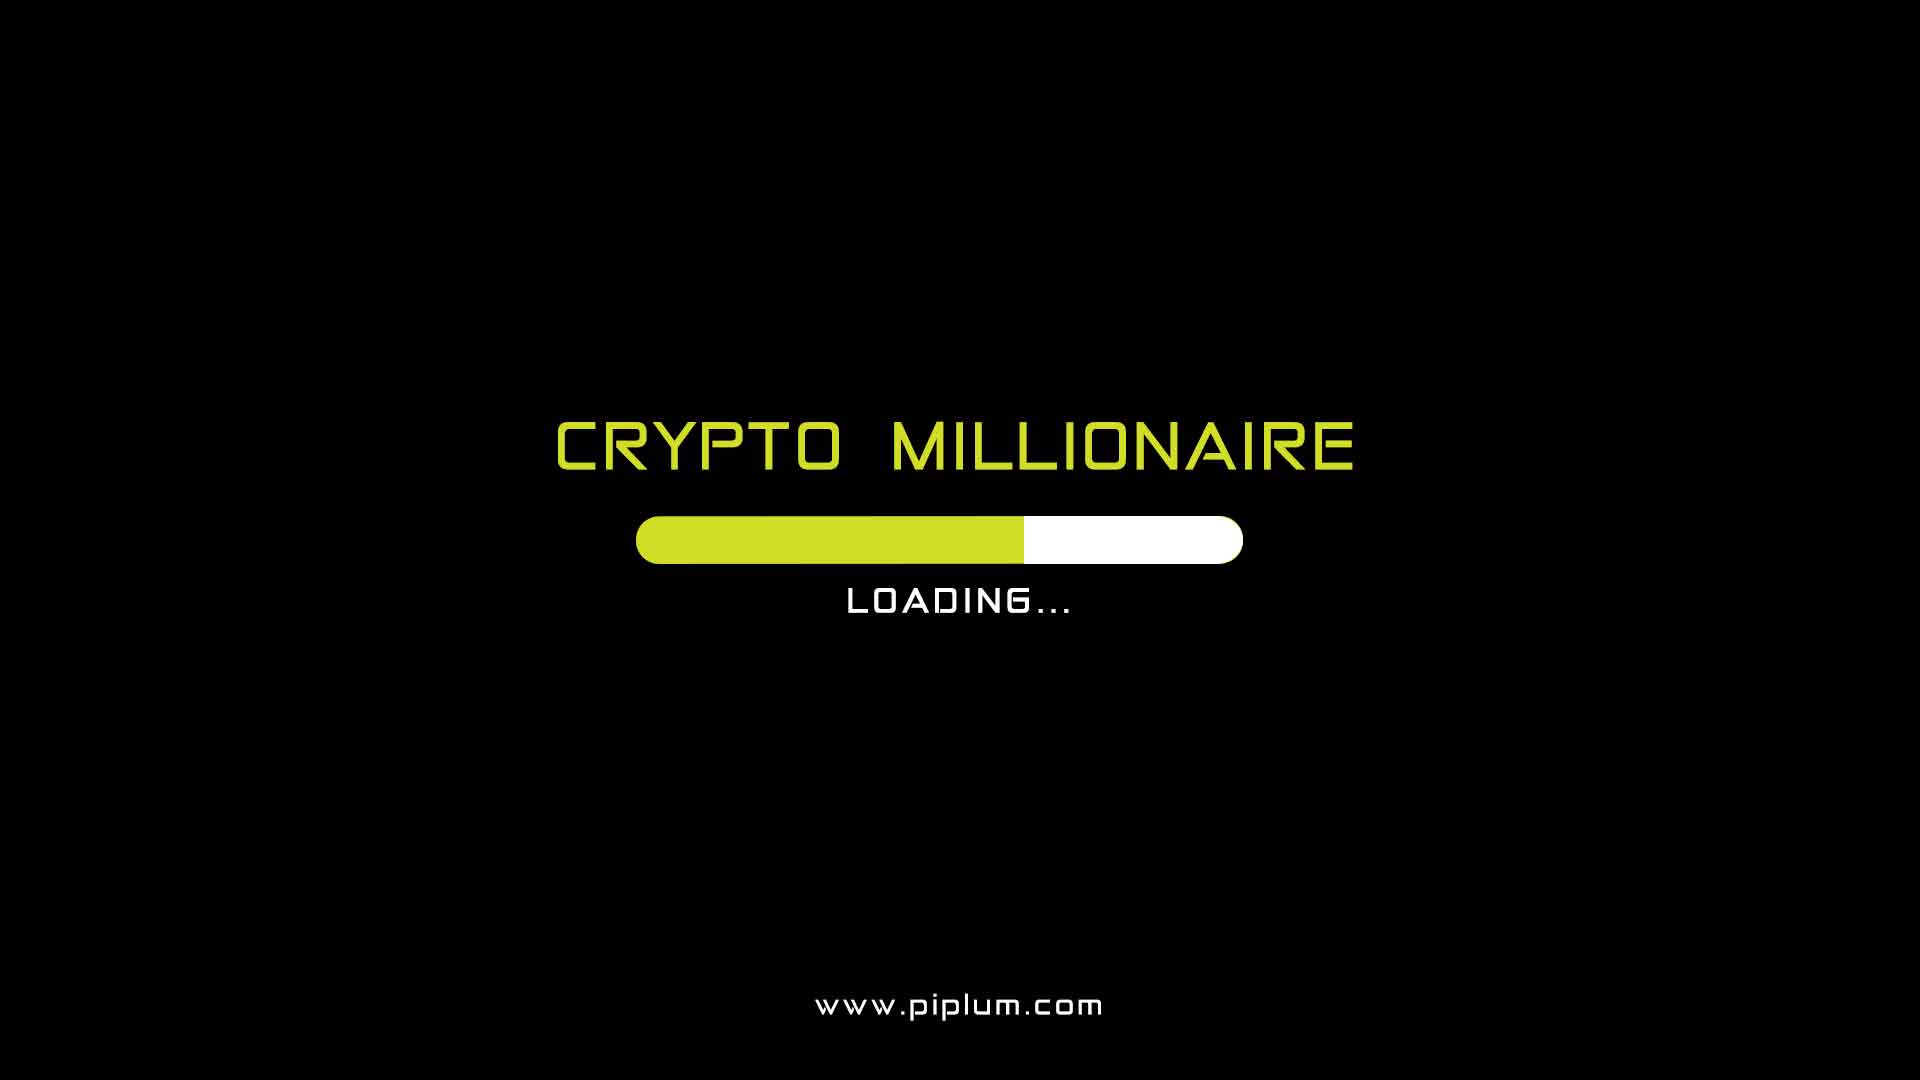 rich-crypto-millionaire-loading-wallpaper-quote